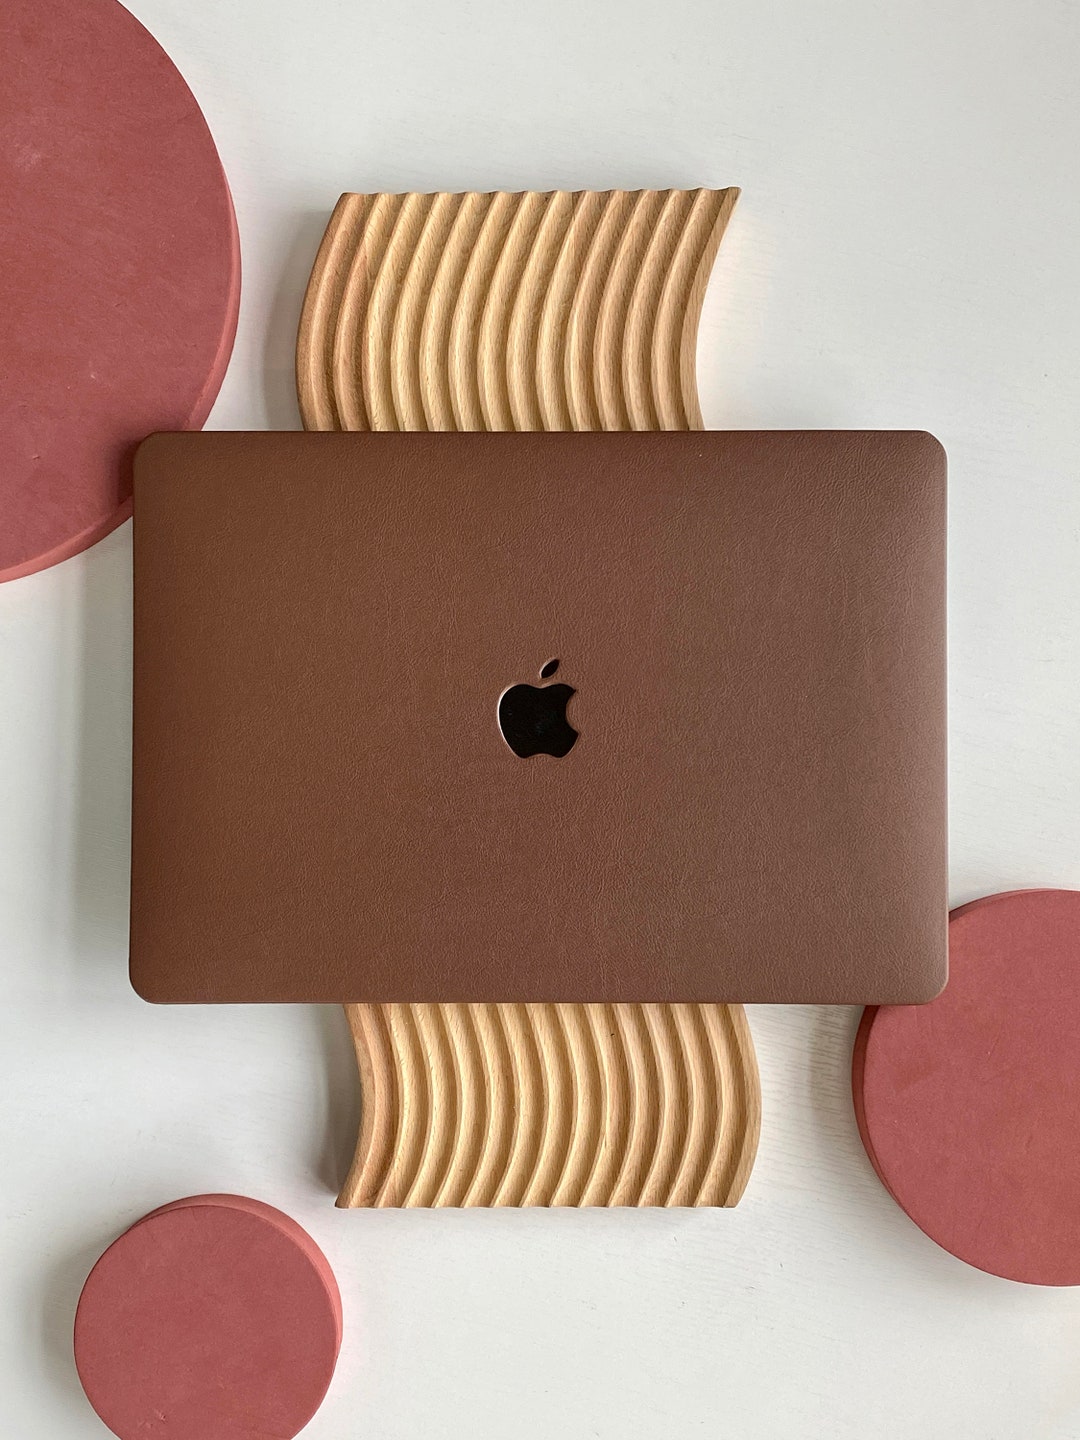 Brown Khaki Checkered Board Trendy MacBook Protective Hard 